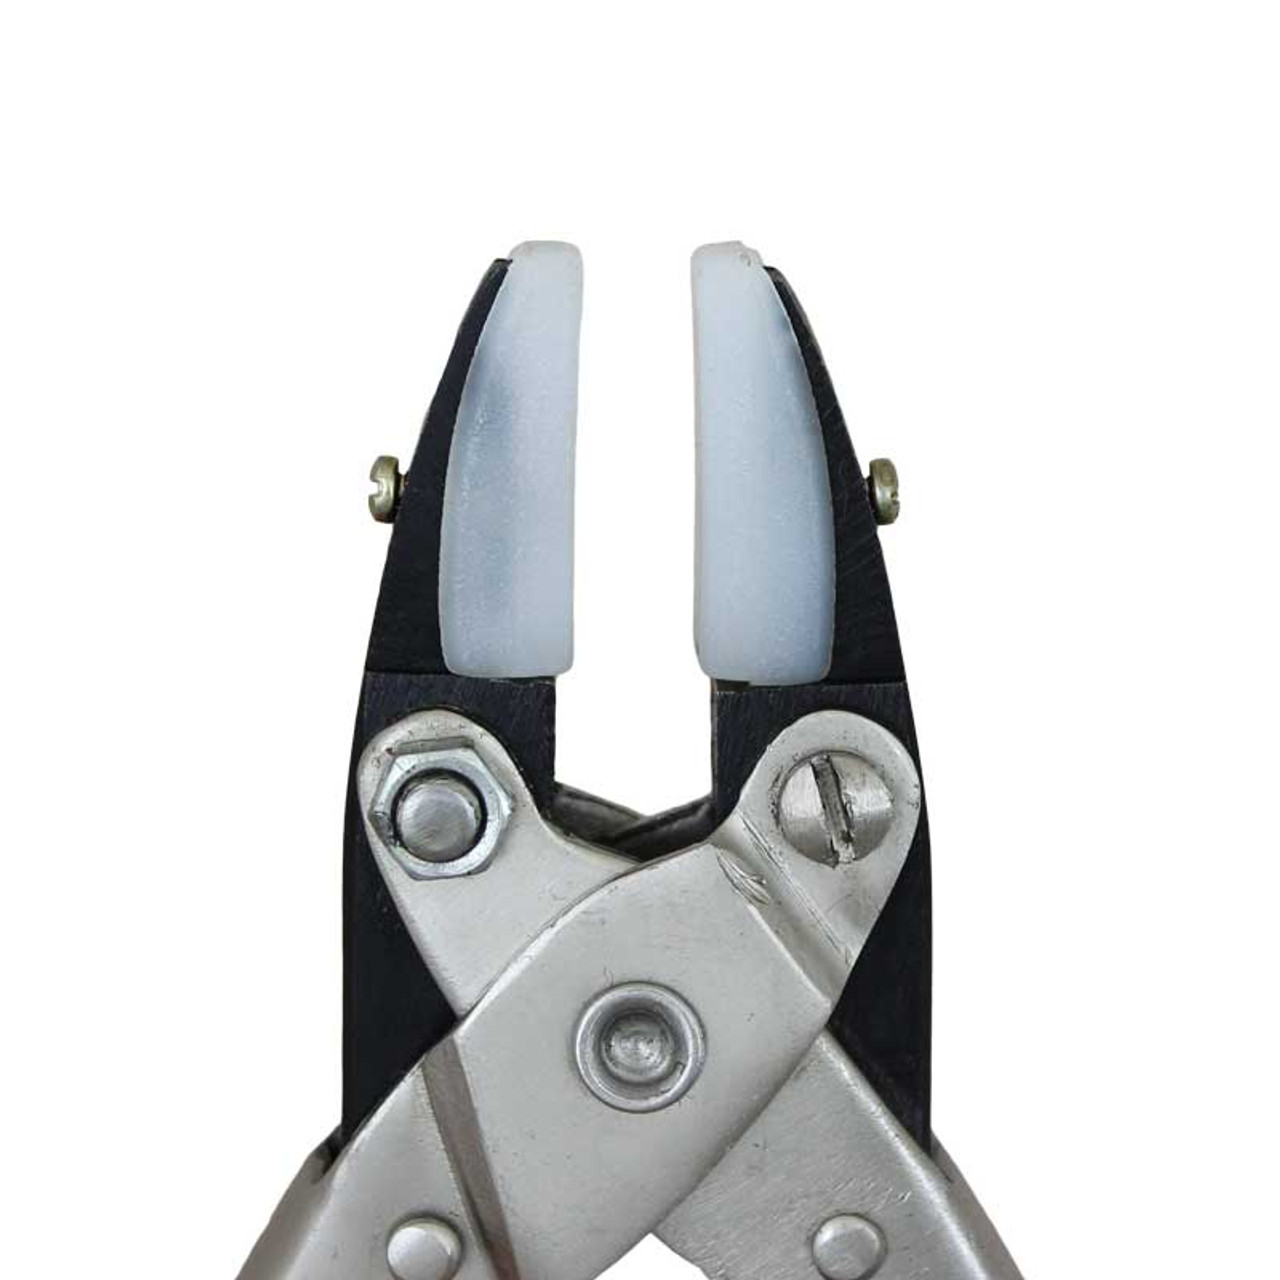 Parallel Flat Nylon Jaw Pliers Safe Jewelry Tool